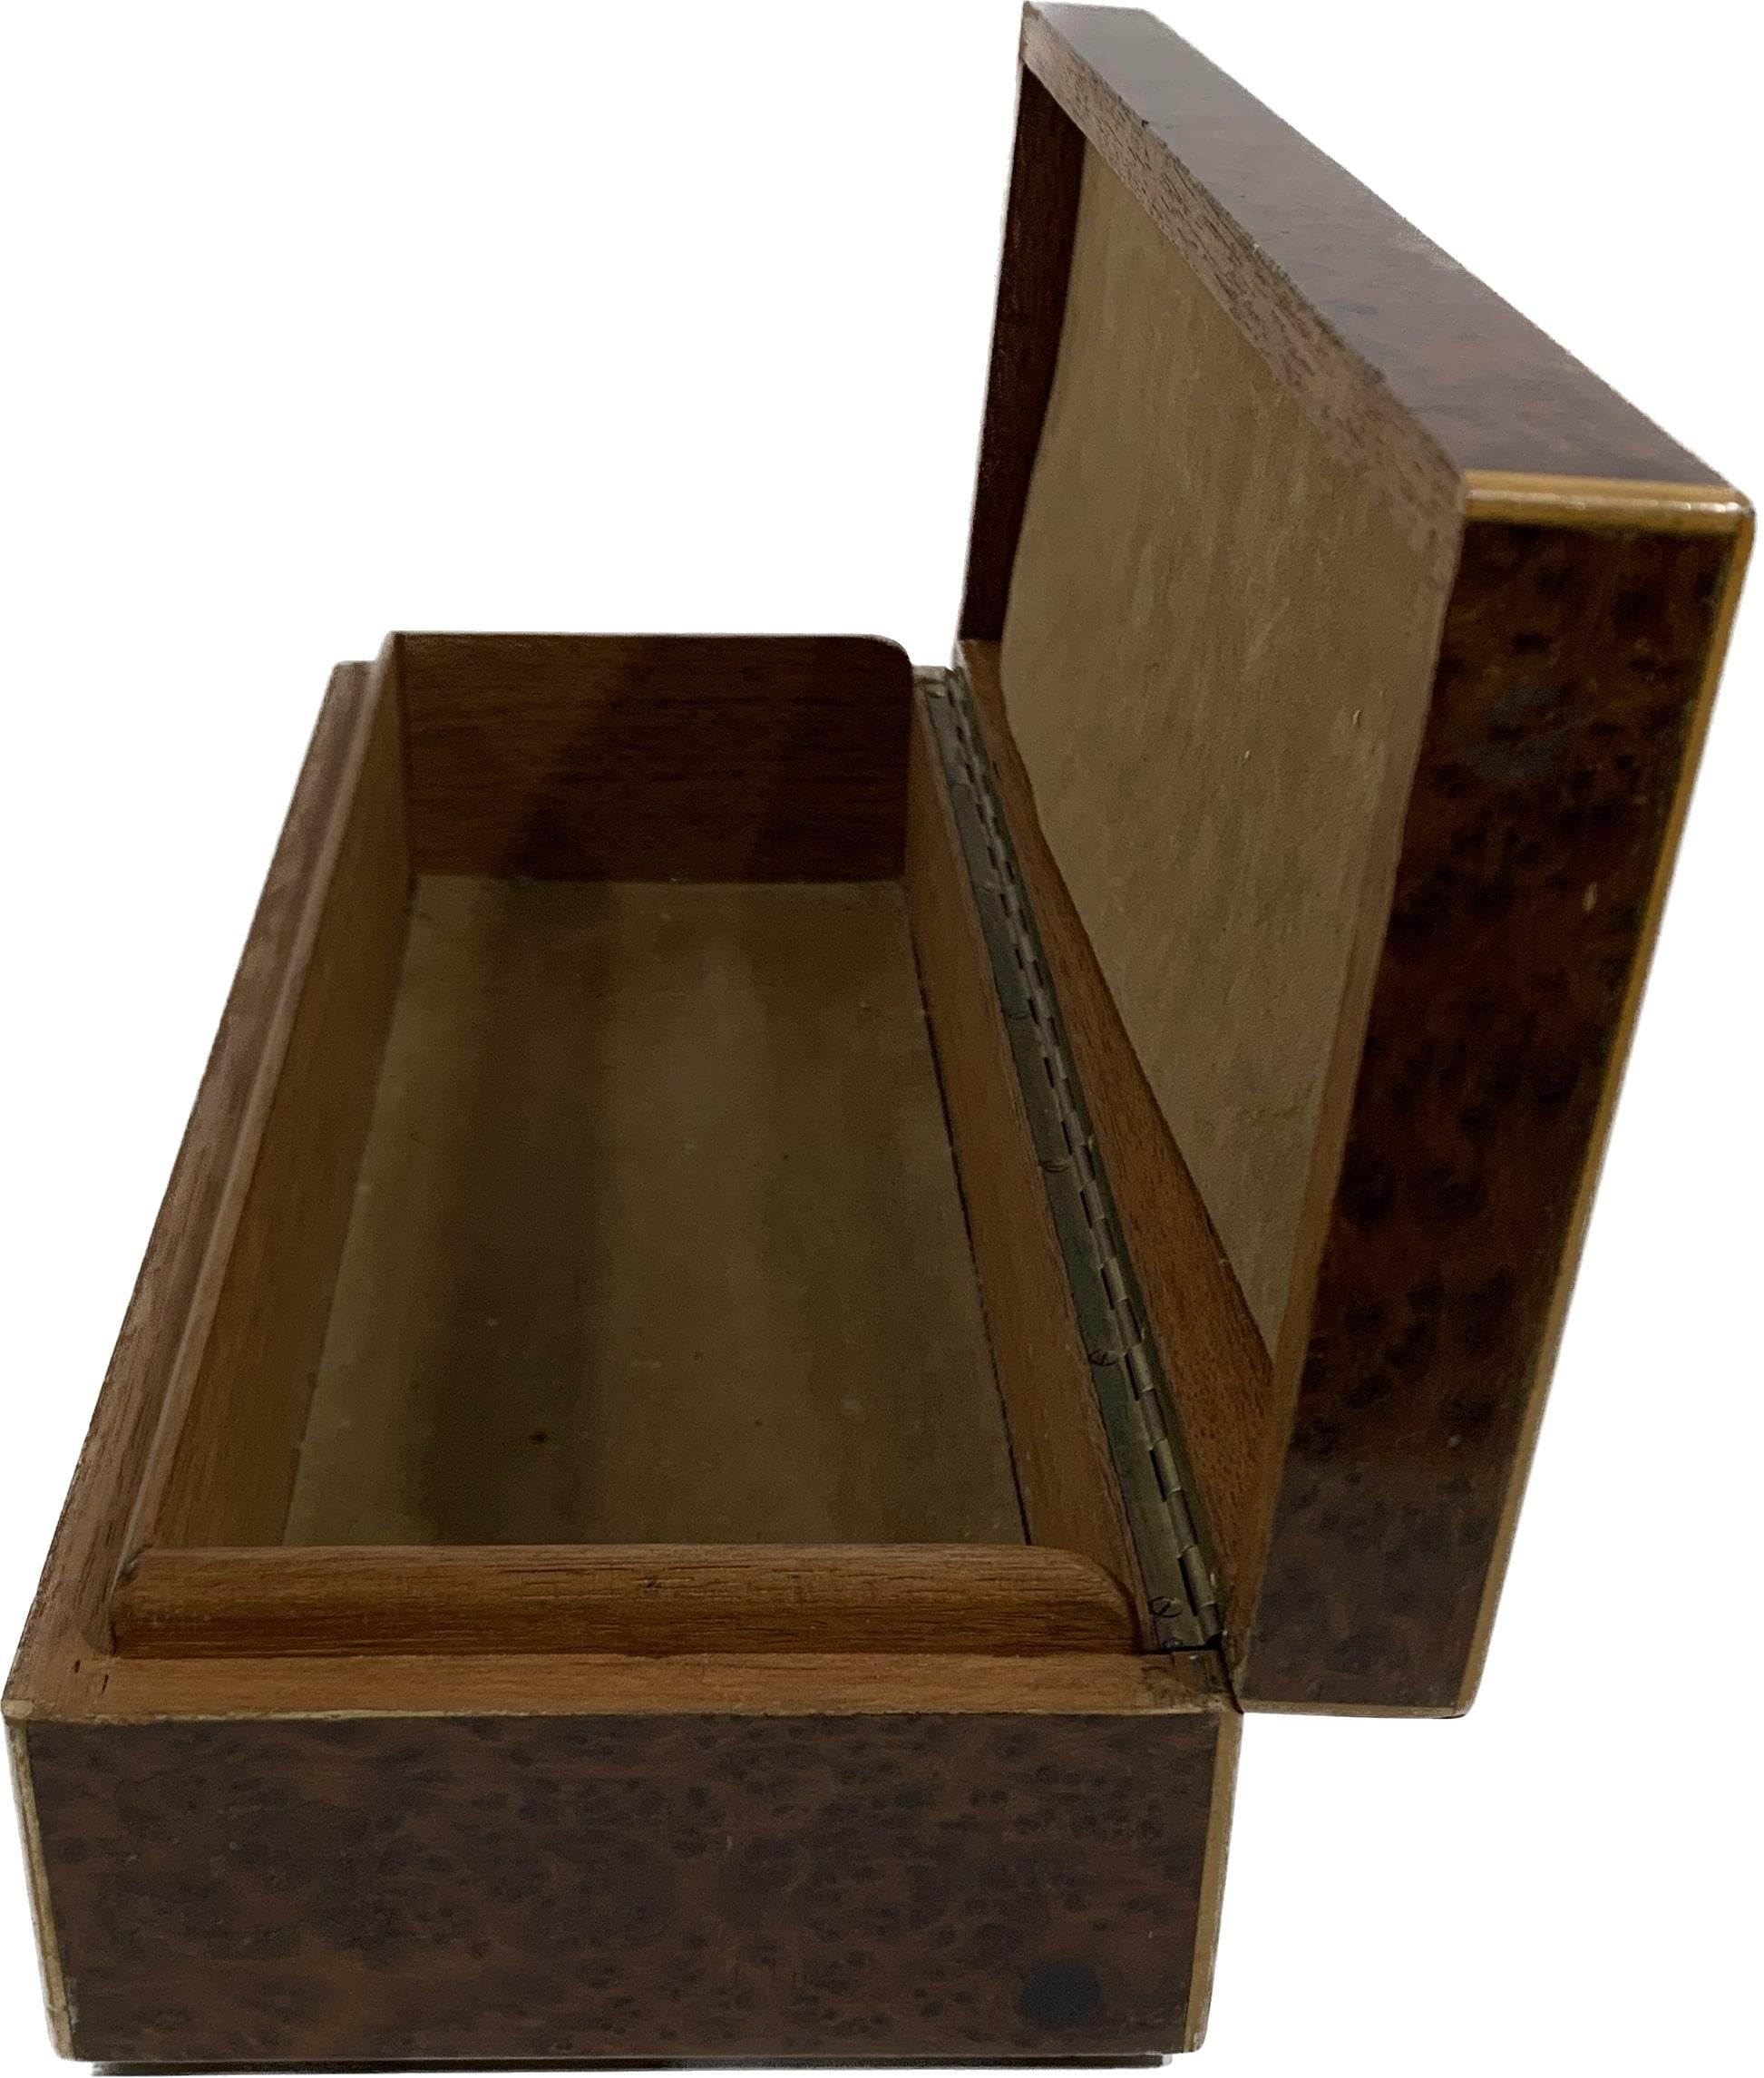 Mid-20th Century Art Déco Decorative Wooden Box For Sale